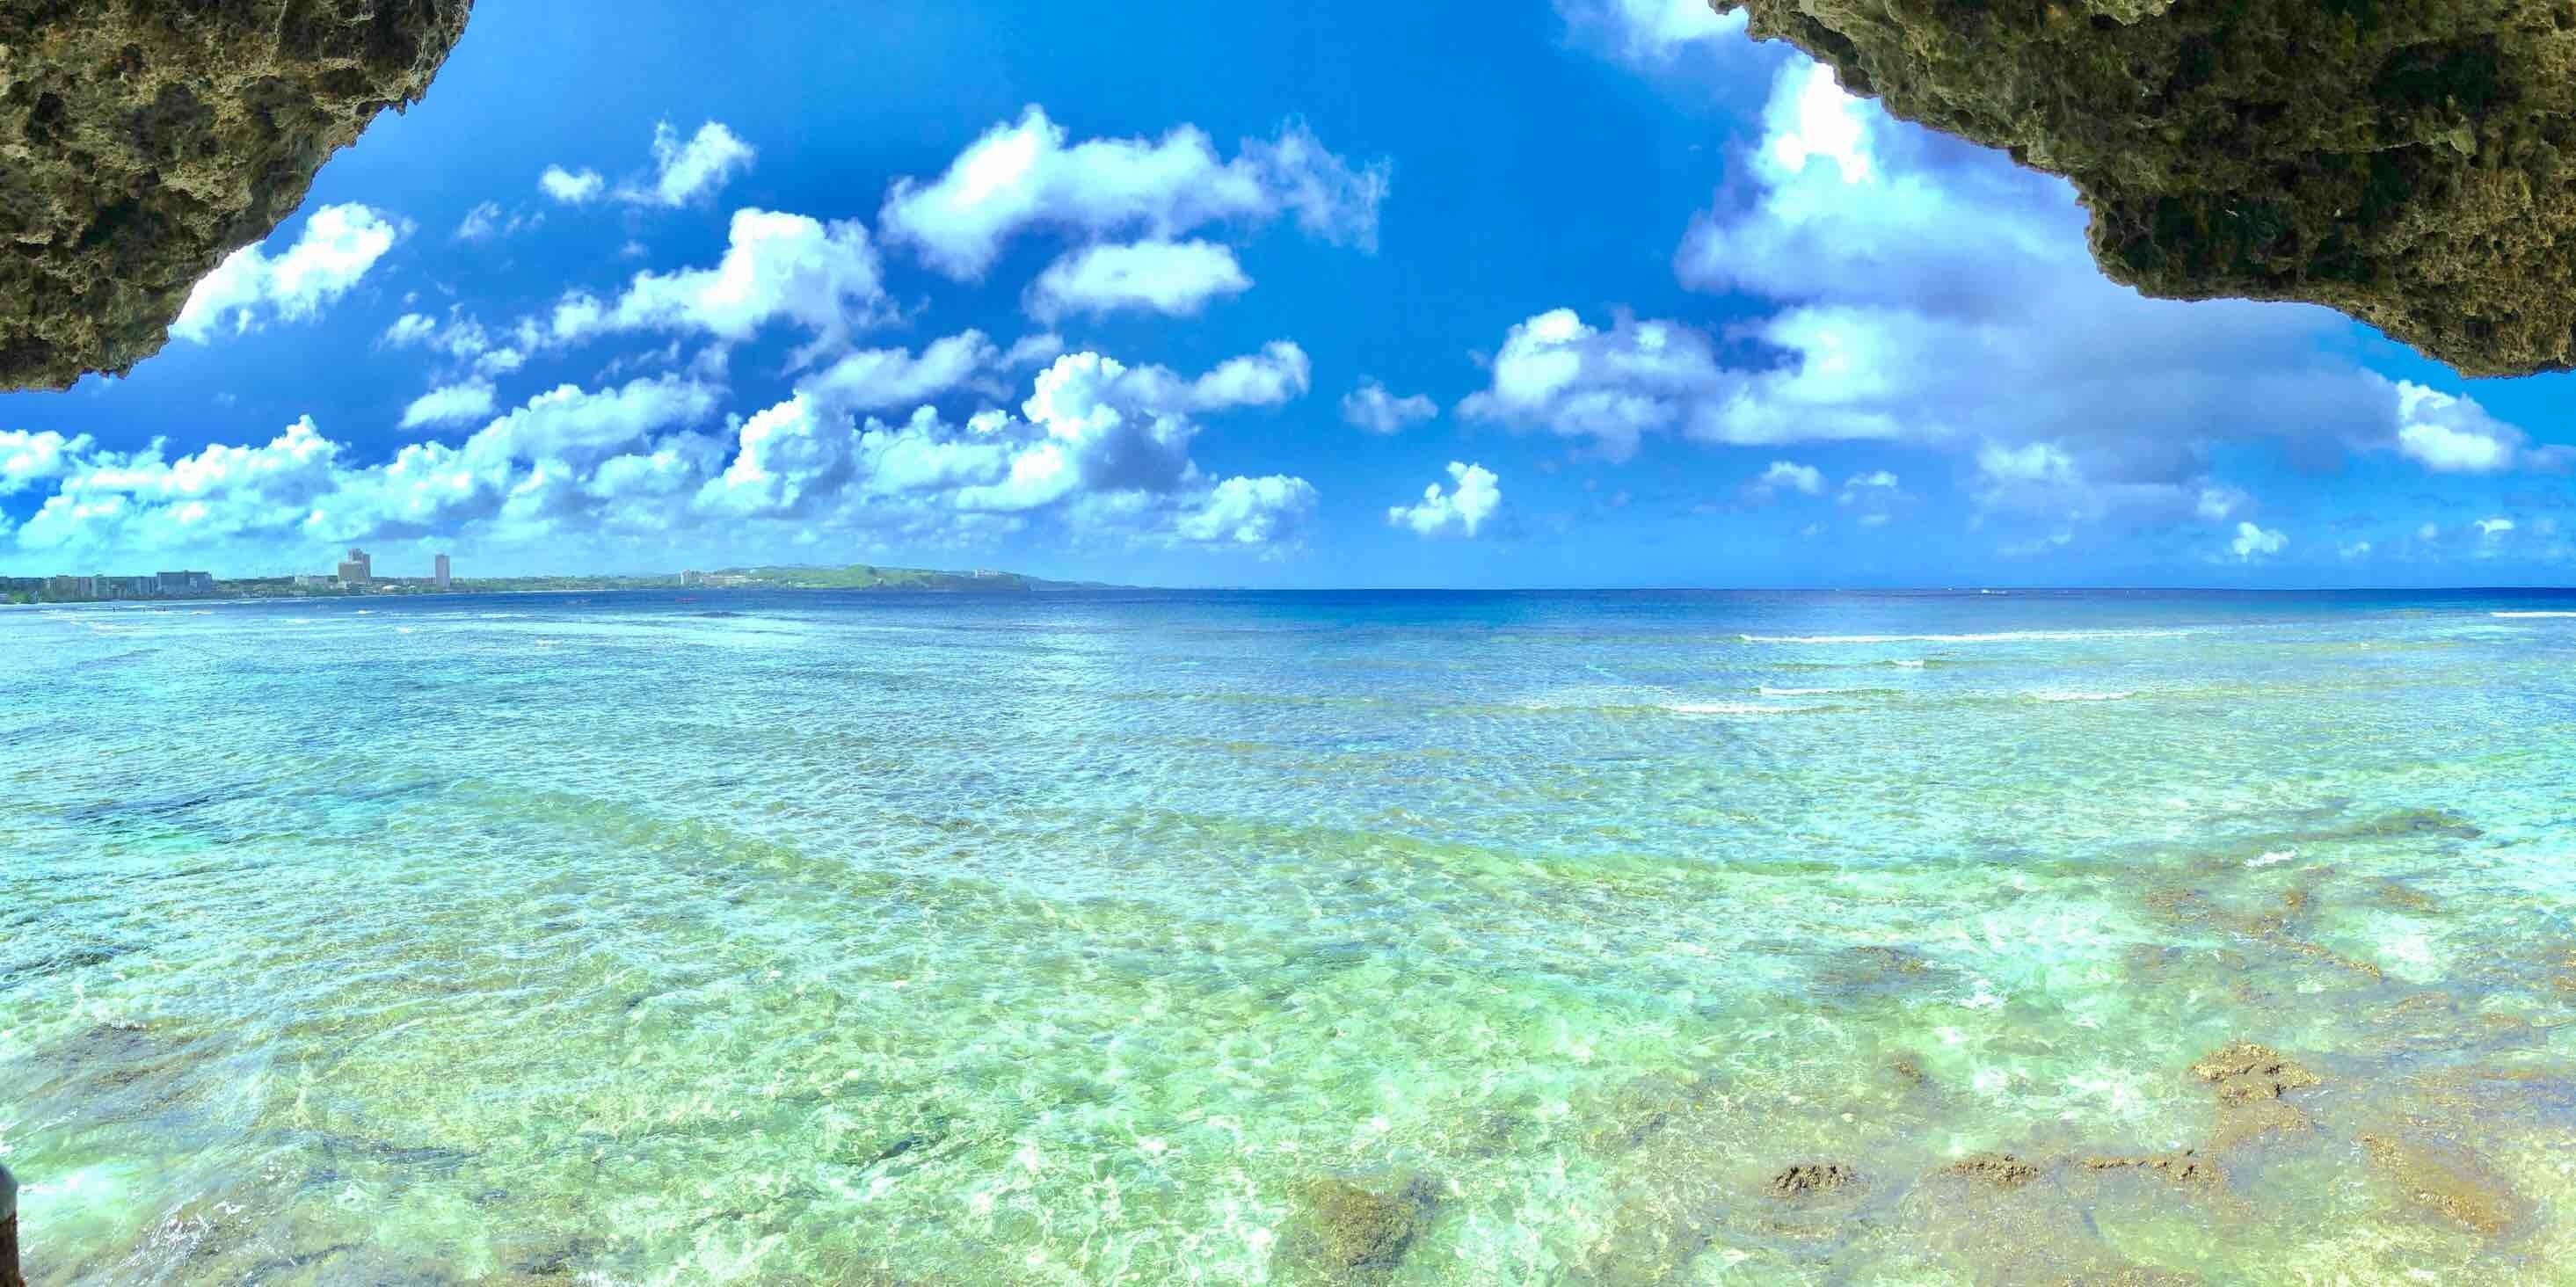 Beautiful clear waters of Tumon Bay, Guam